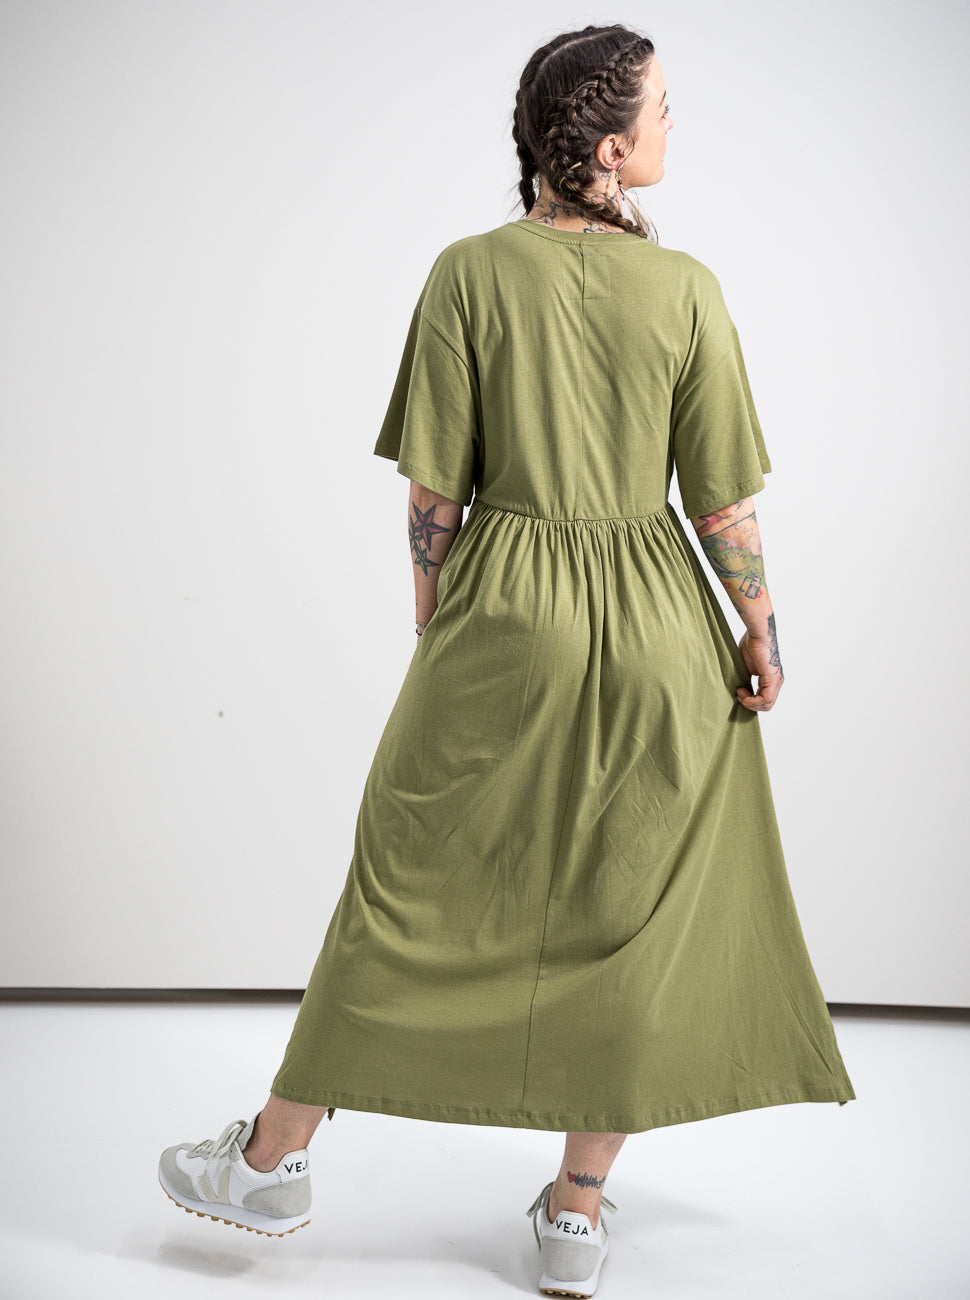 Damen lockeres T-Shirt Kleid (olivgrün)